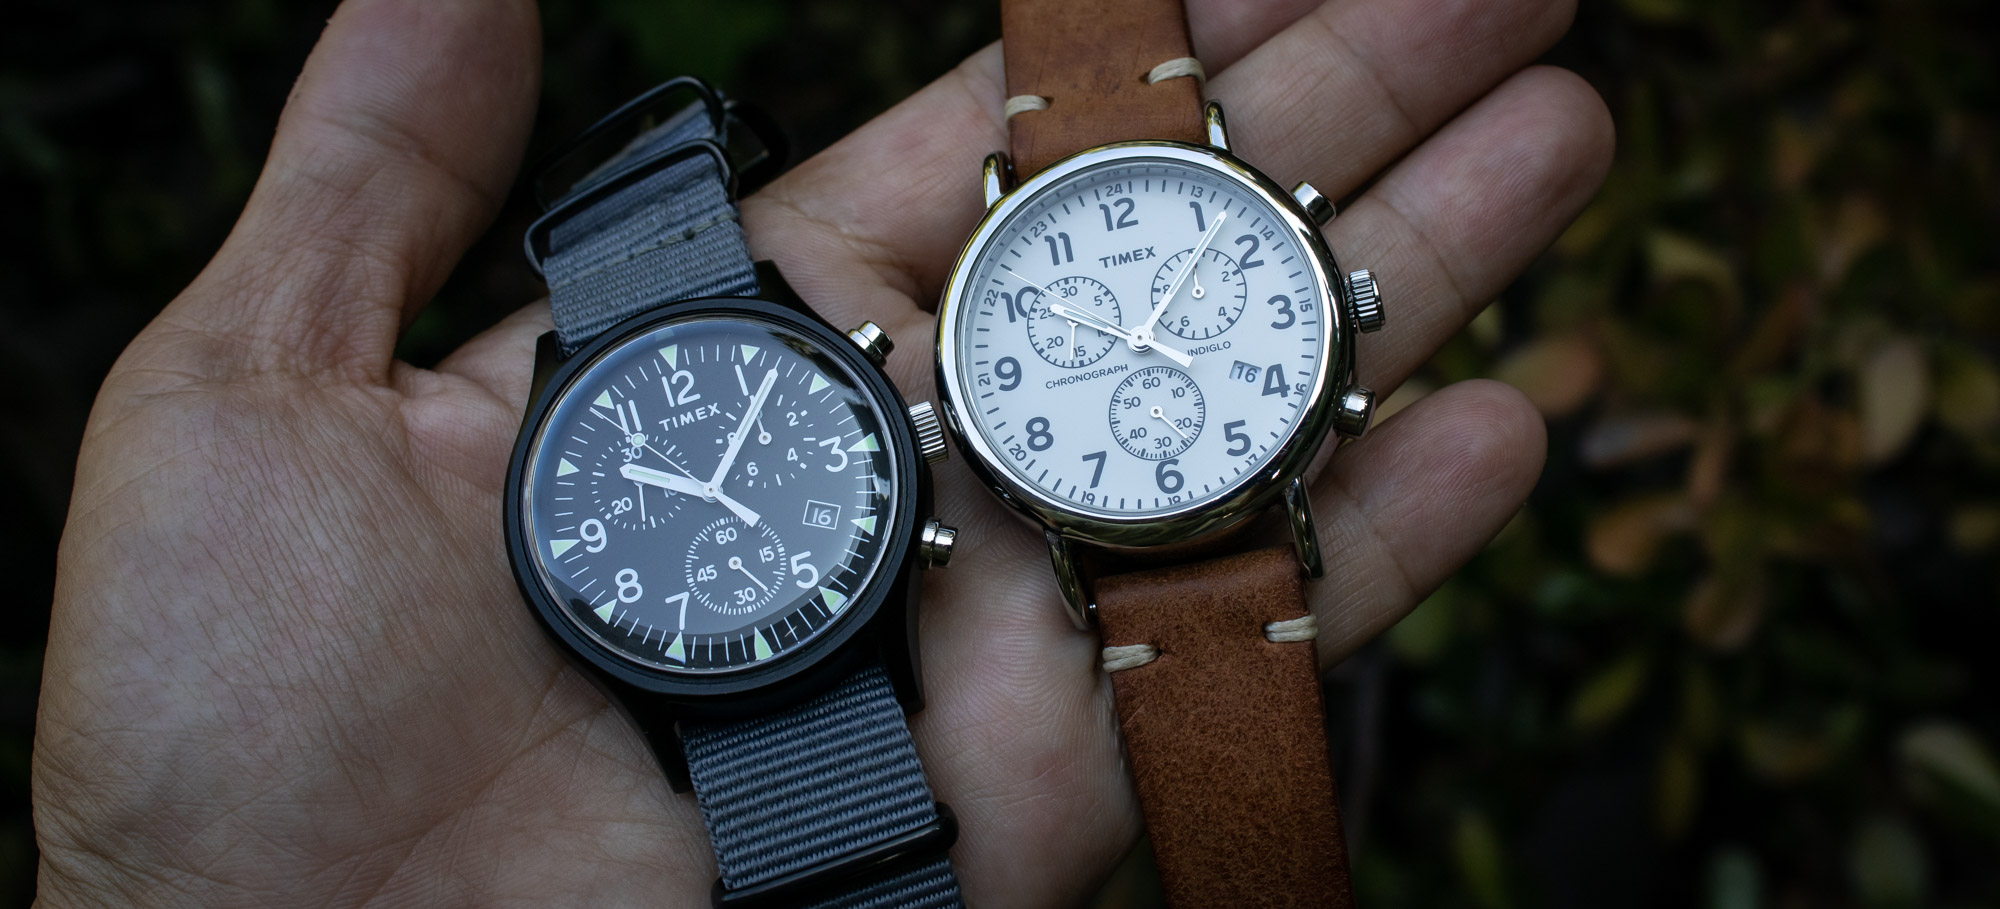 TX watches | Wrist watch, Horology, Timex